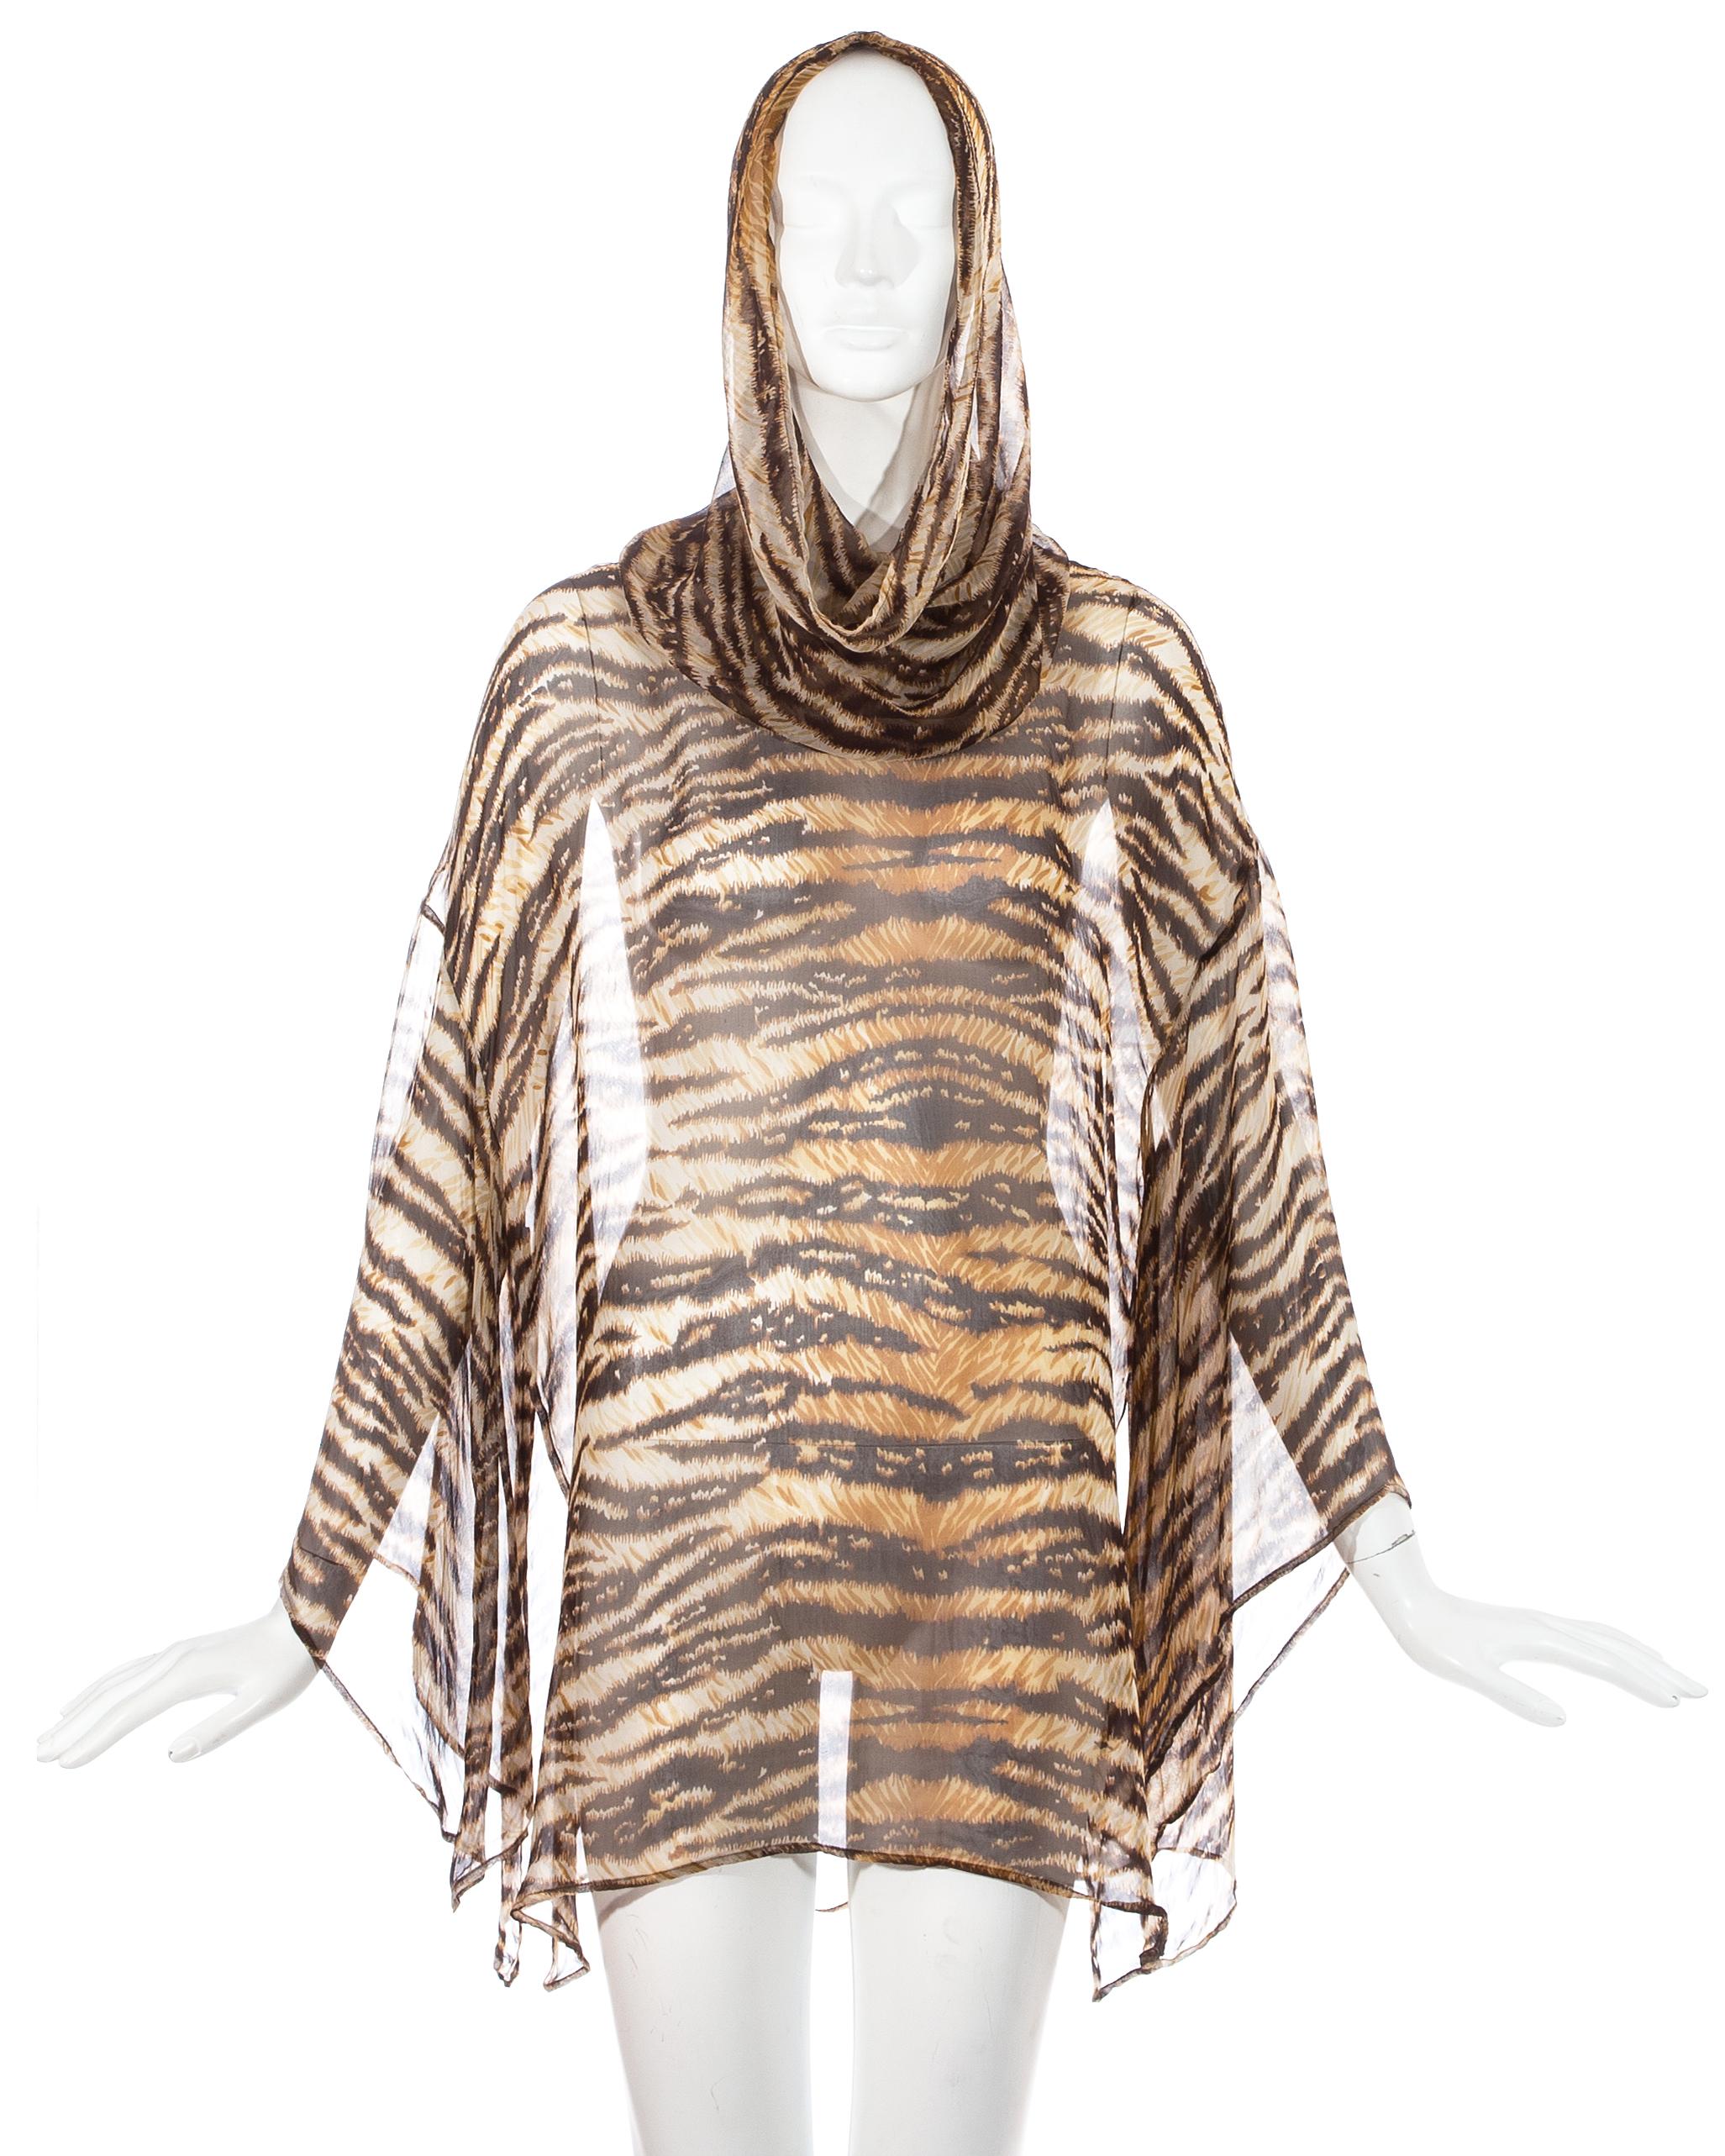 Dolce & Gabbana animal print silk chiffon hooded caftan dress

Spring-Summer 1996